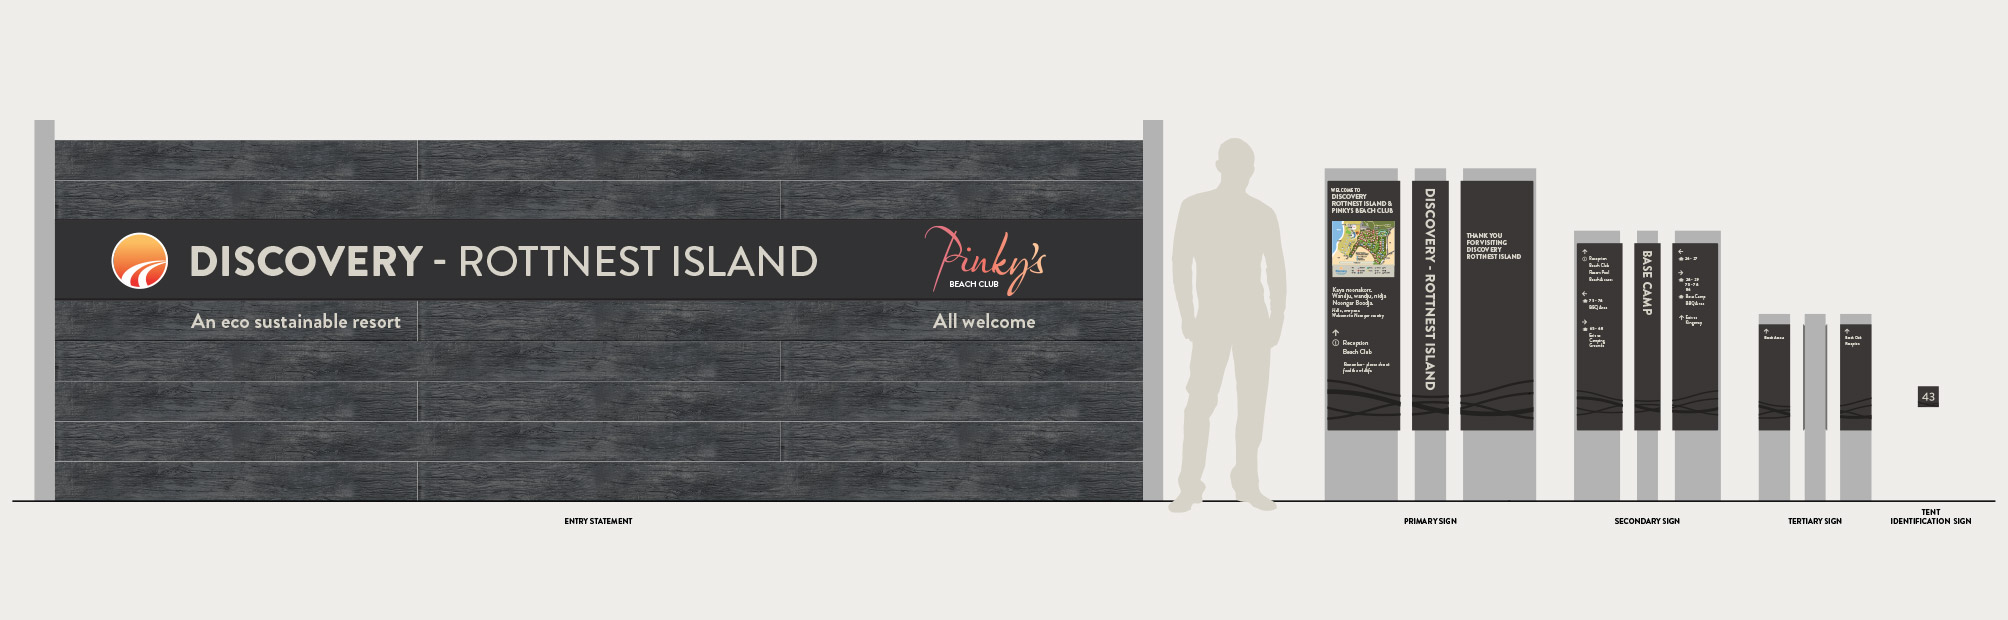 Discovery Rottnest Island Resort Signage System